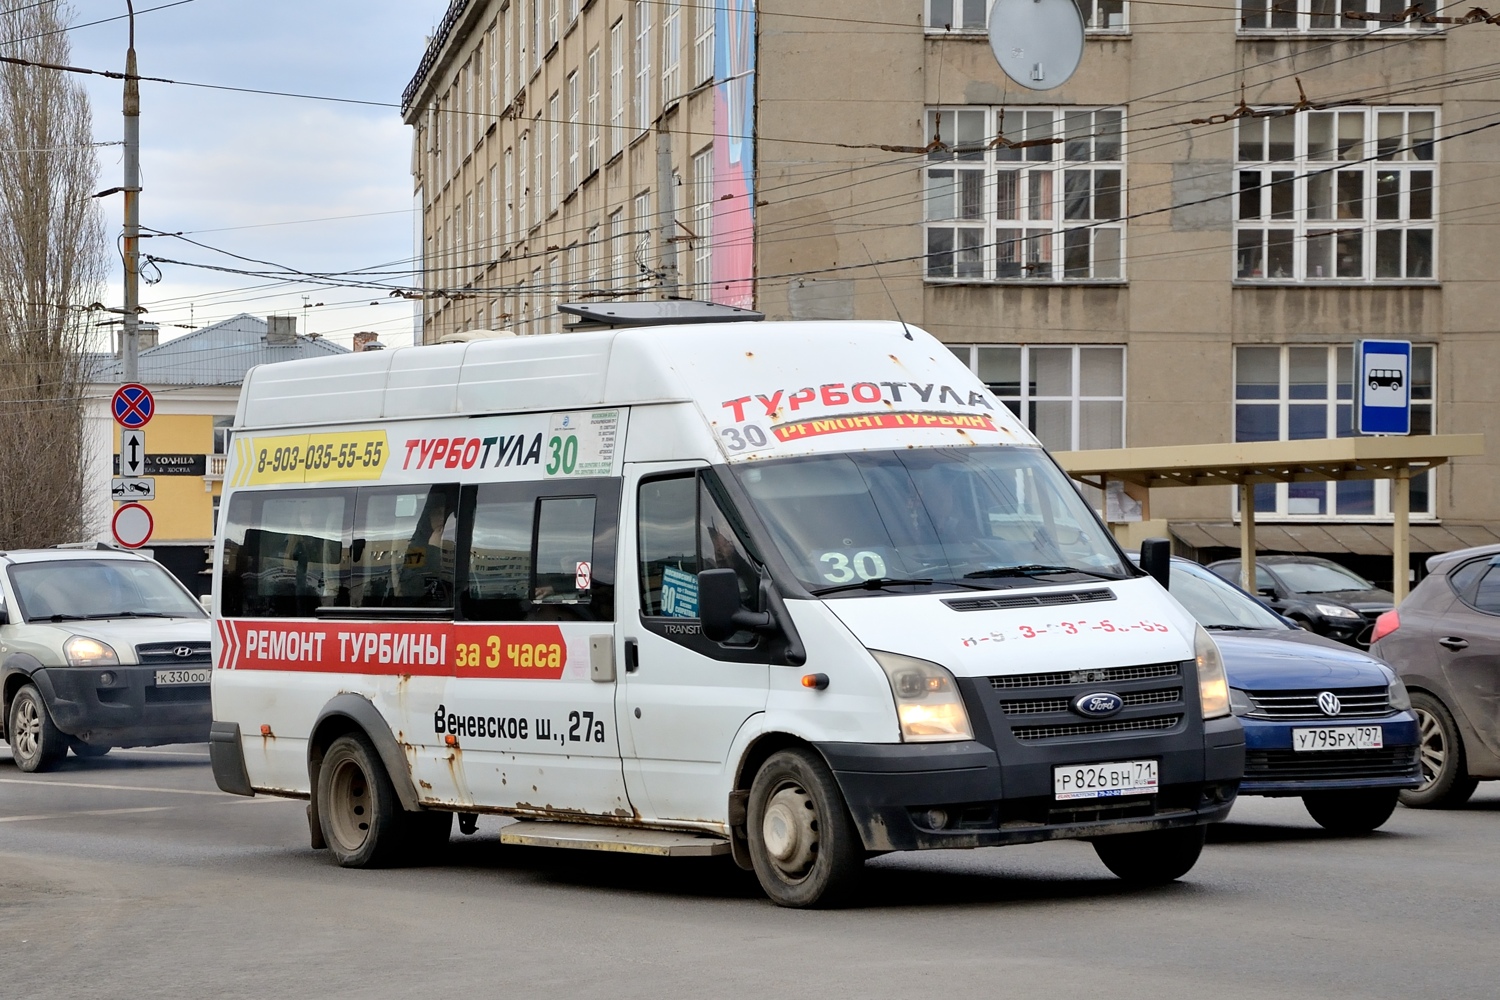 Tula, Имя-М-3006 (Z9S) (Ford Transit) # Р 826 ВН 71